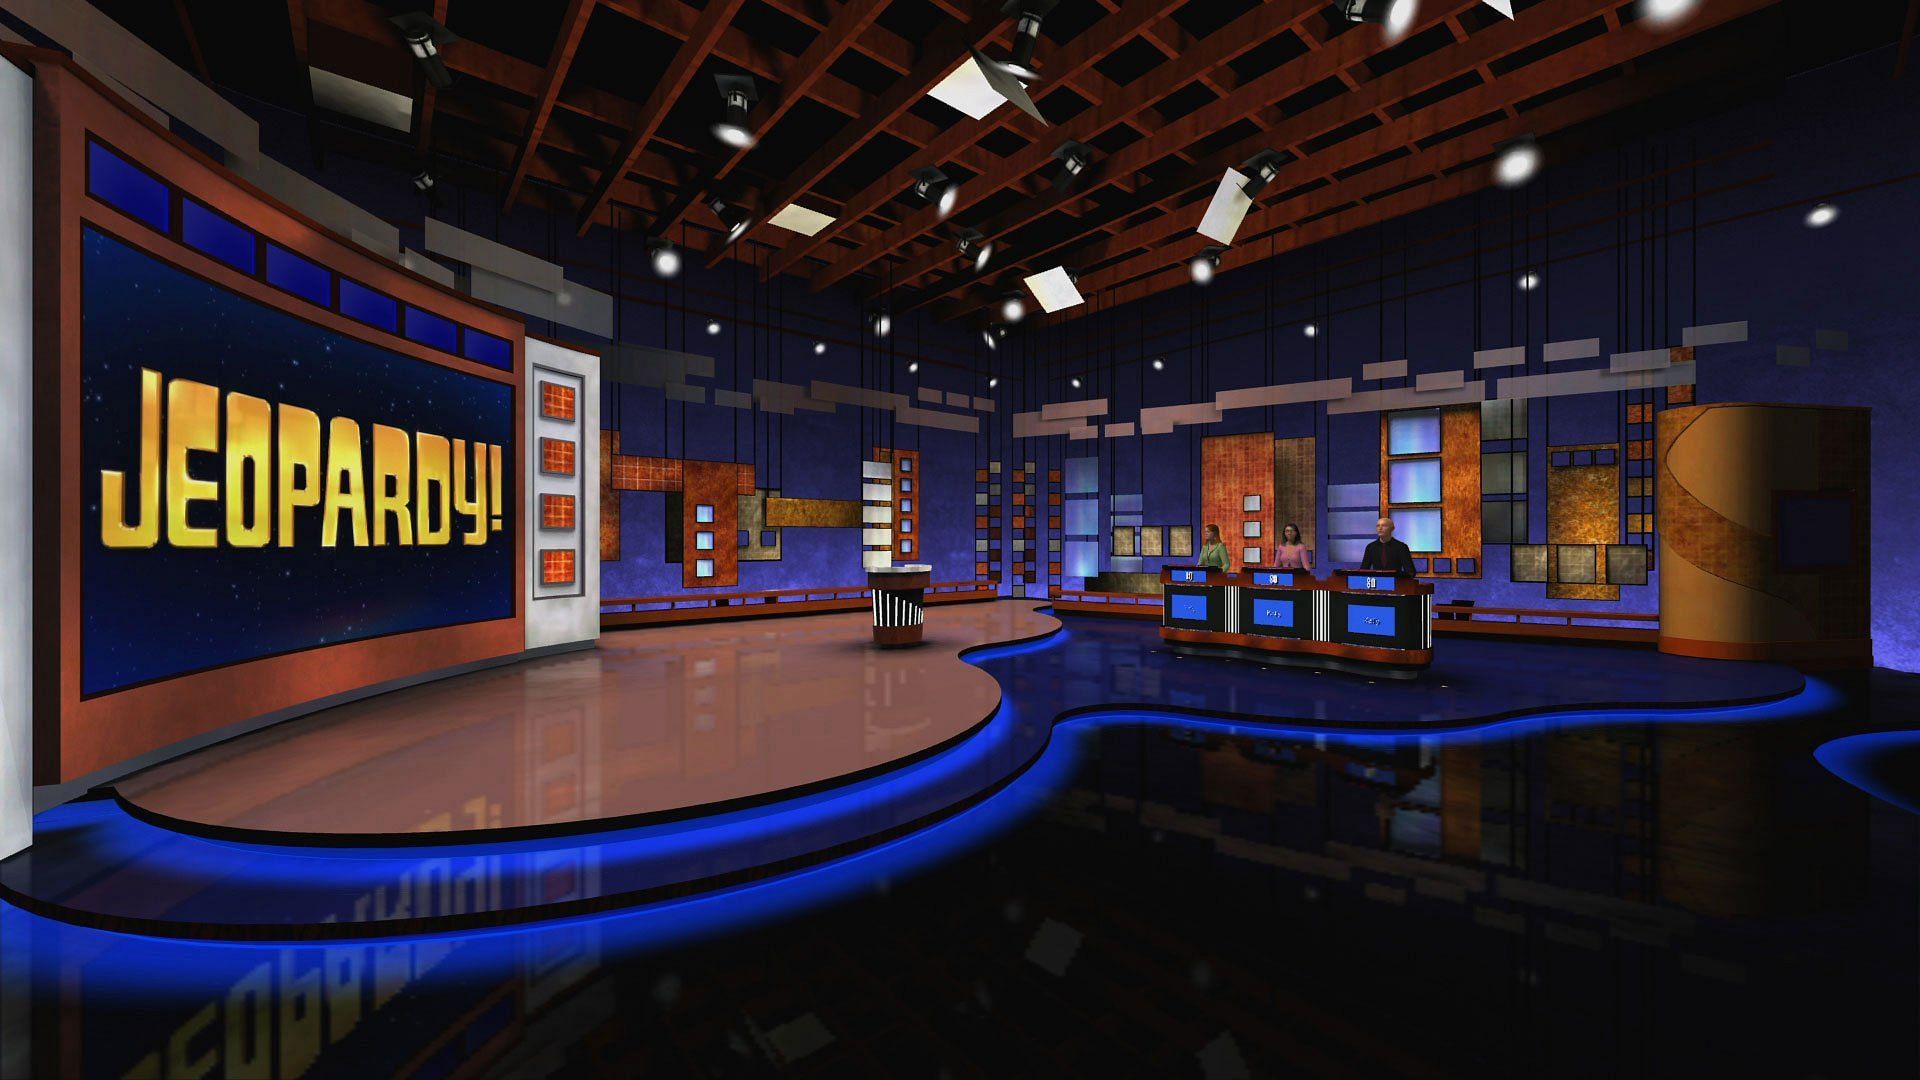 The set of Jeopardy! (Image via @Jeopardy/Instagram)